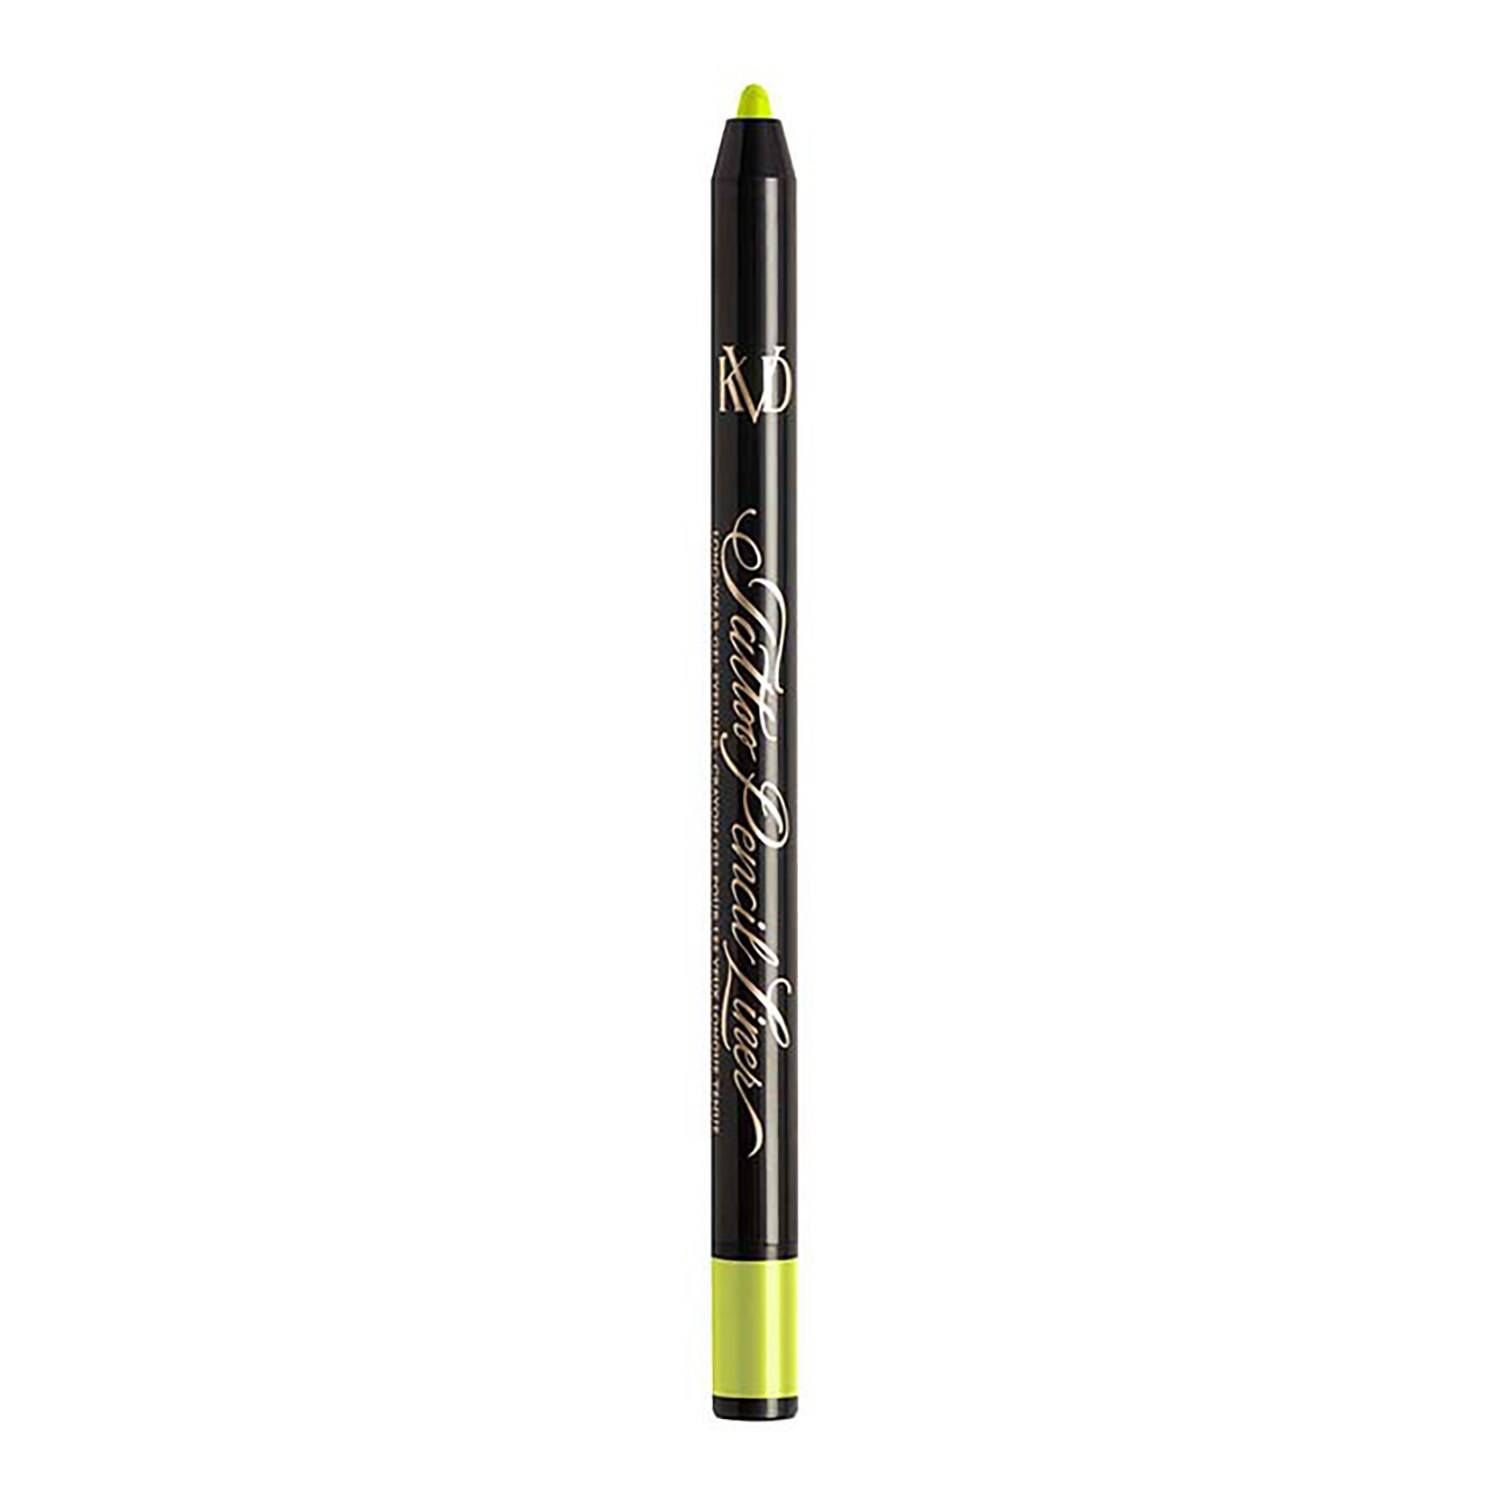 Kvd Beauty Tattoo Pencil Liner 0.5G Radium Green 130